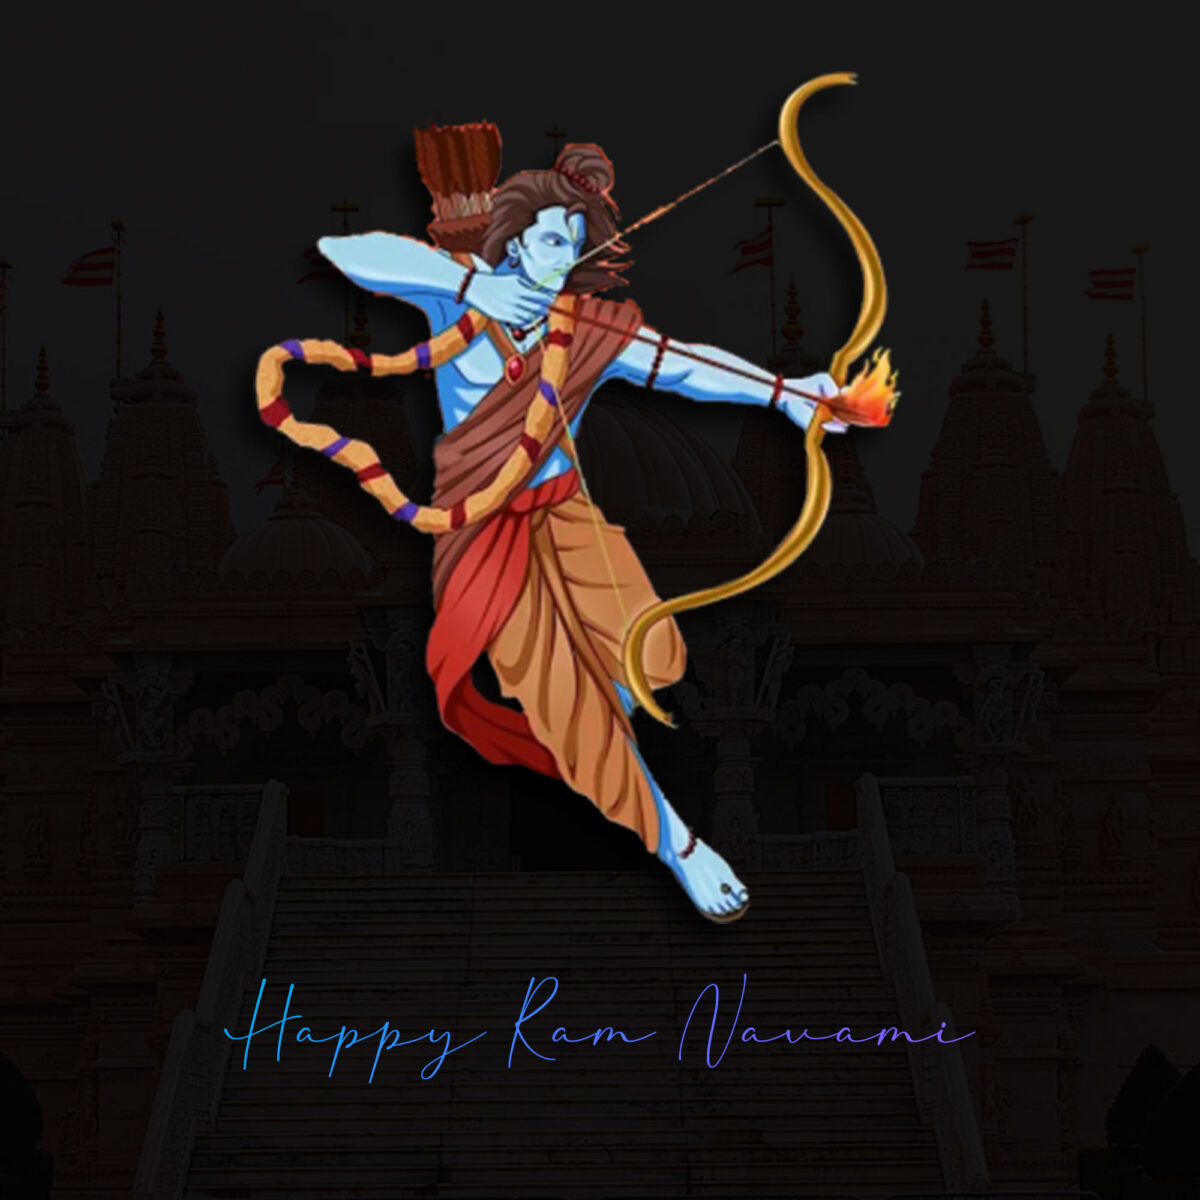 happy ram navami wishes images